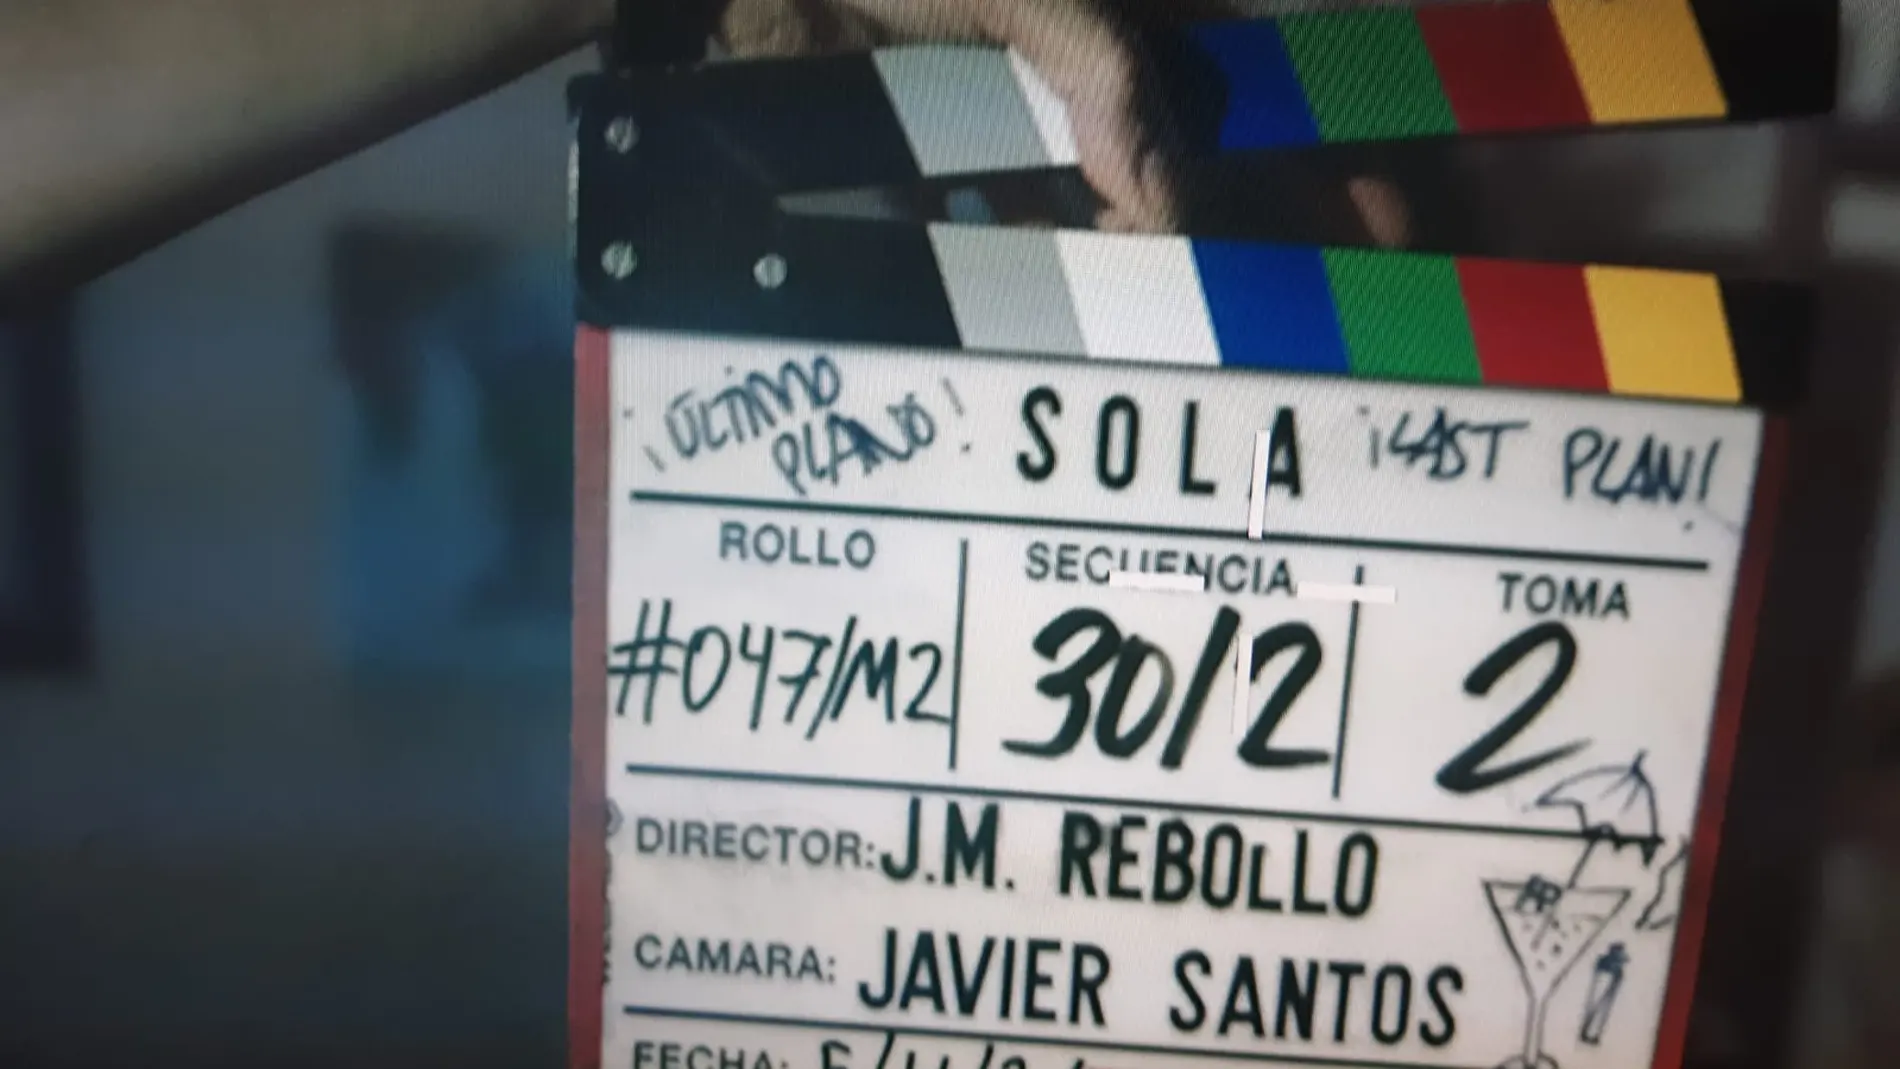 Claqueta de la película "Sola", dirigida por José Manuel Rebollo